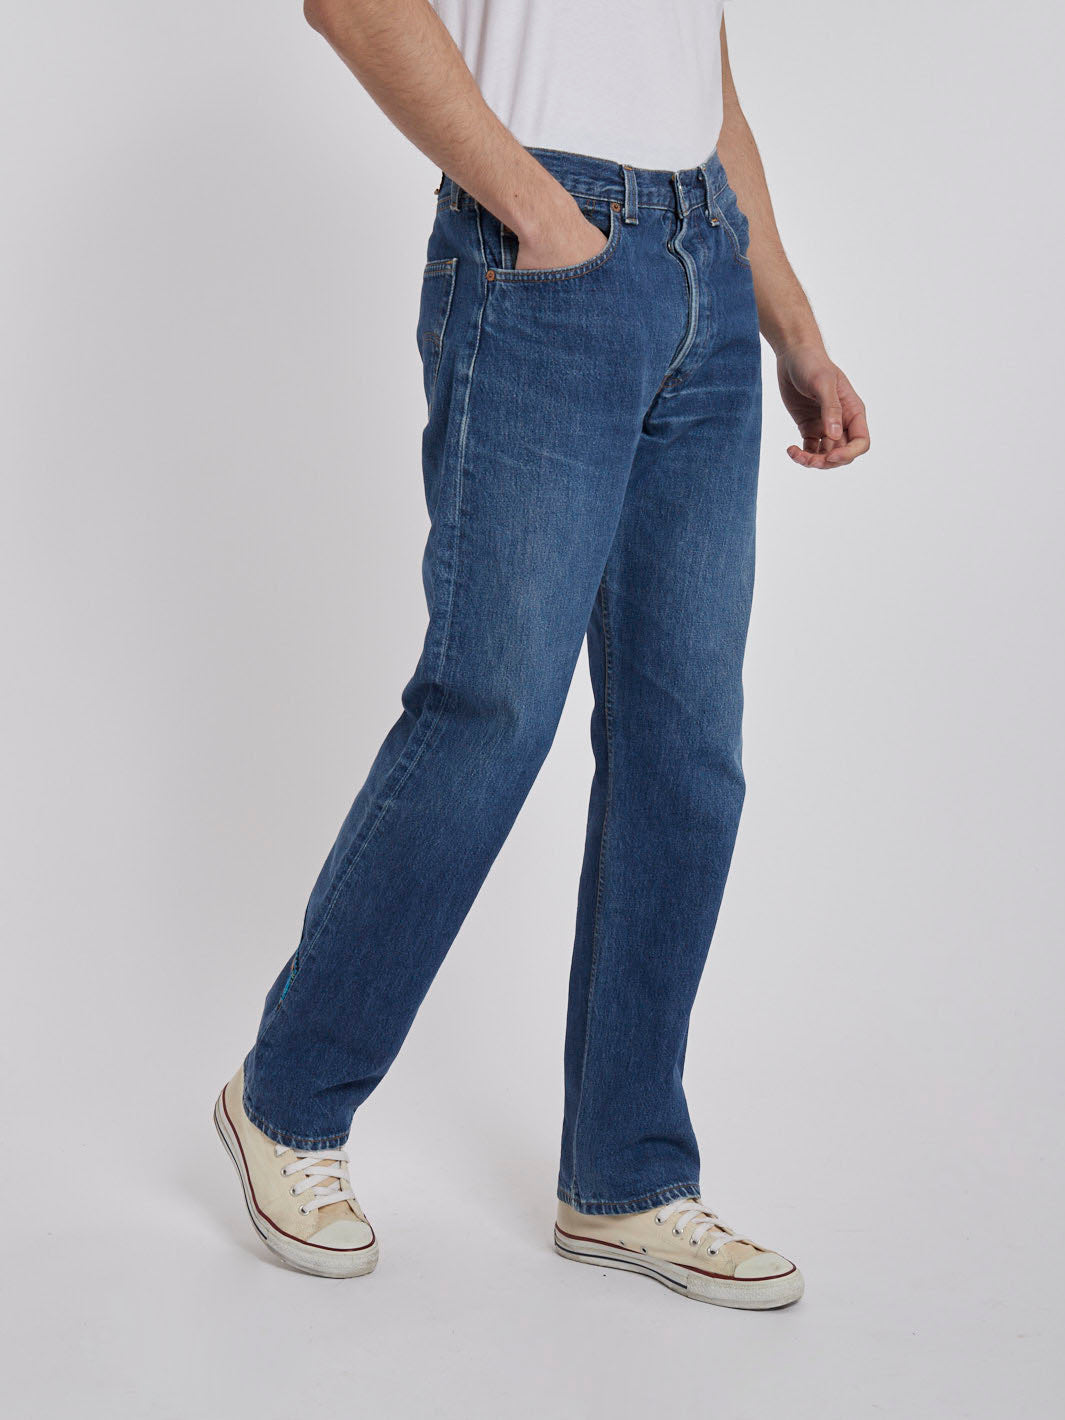 1970s Levi's 501 Jeans customised by Cavalli e Nastri